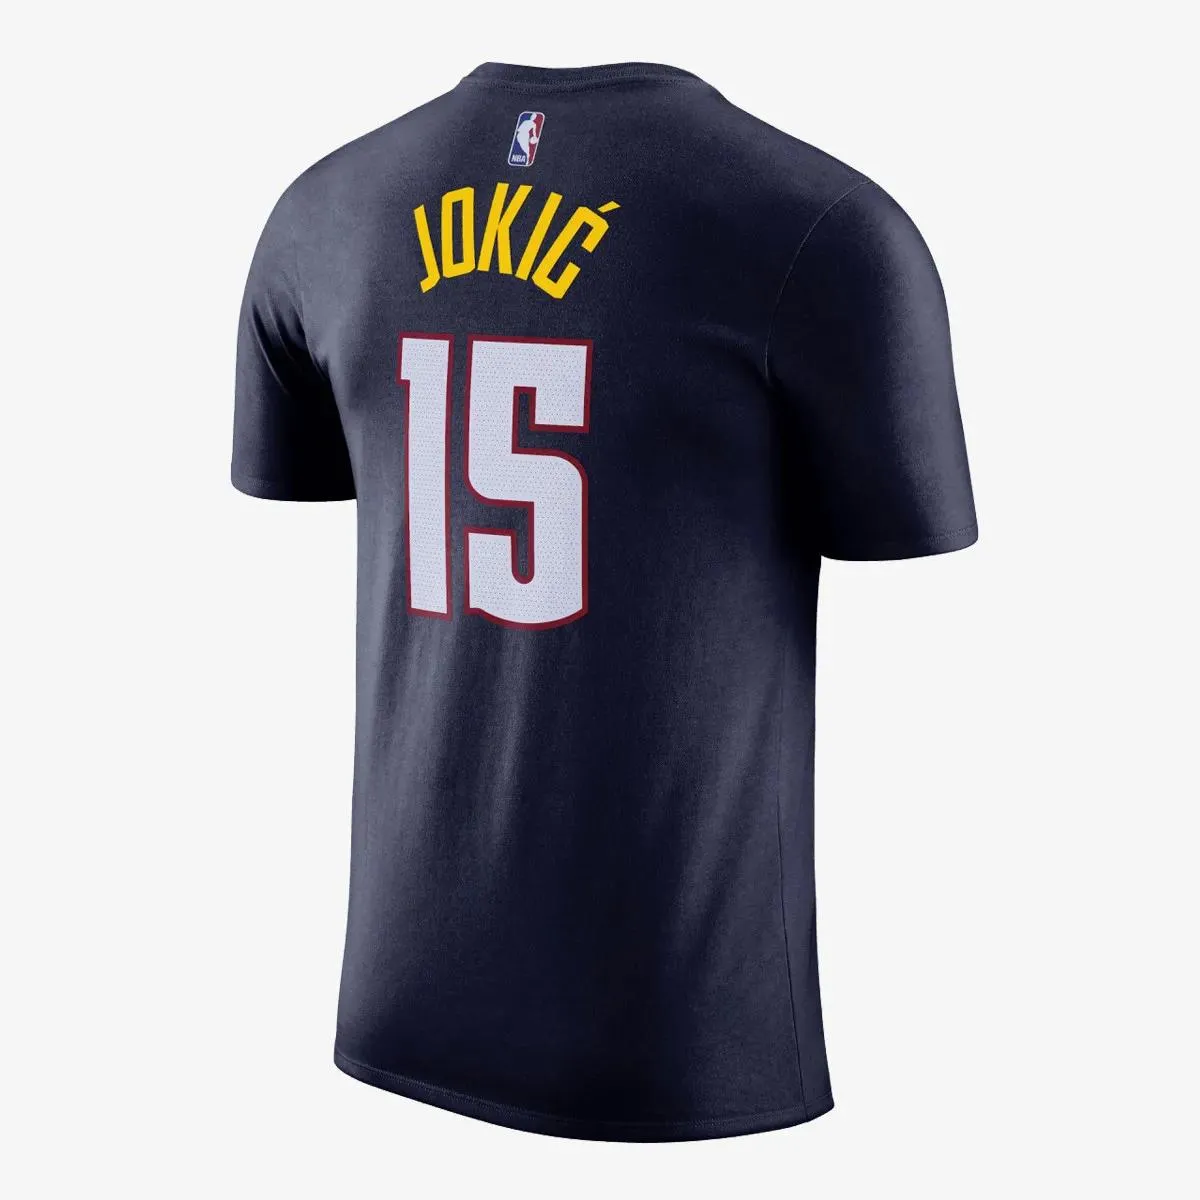 Nike T-shirt Nikola Jokic Denver Nuggets 